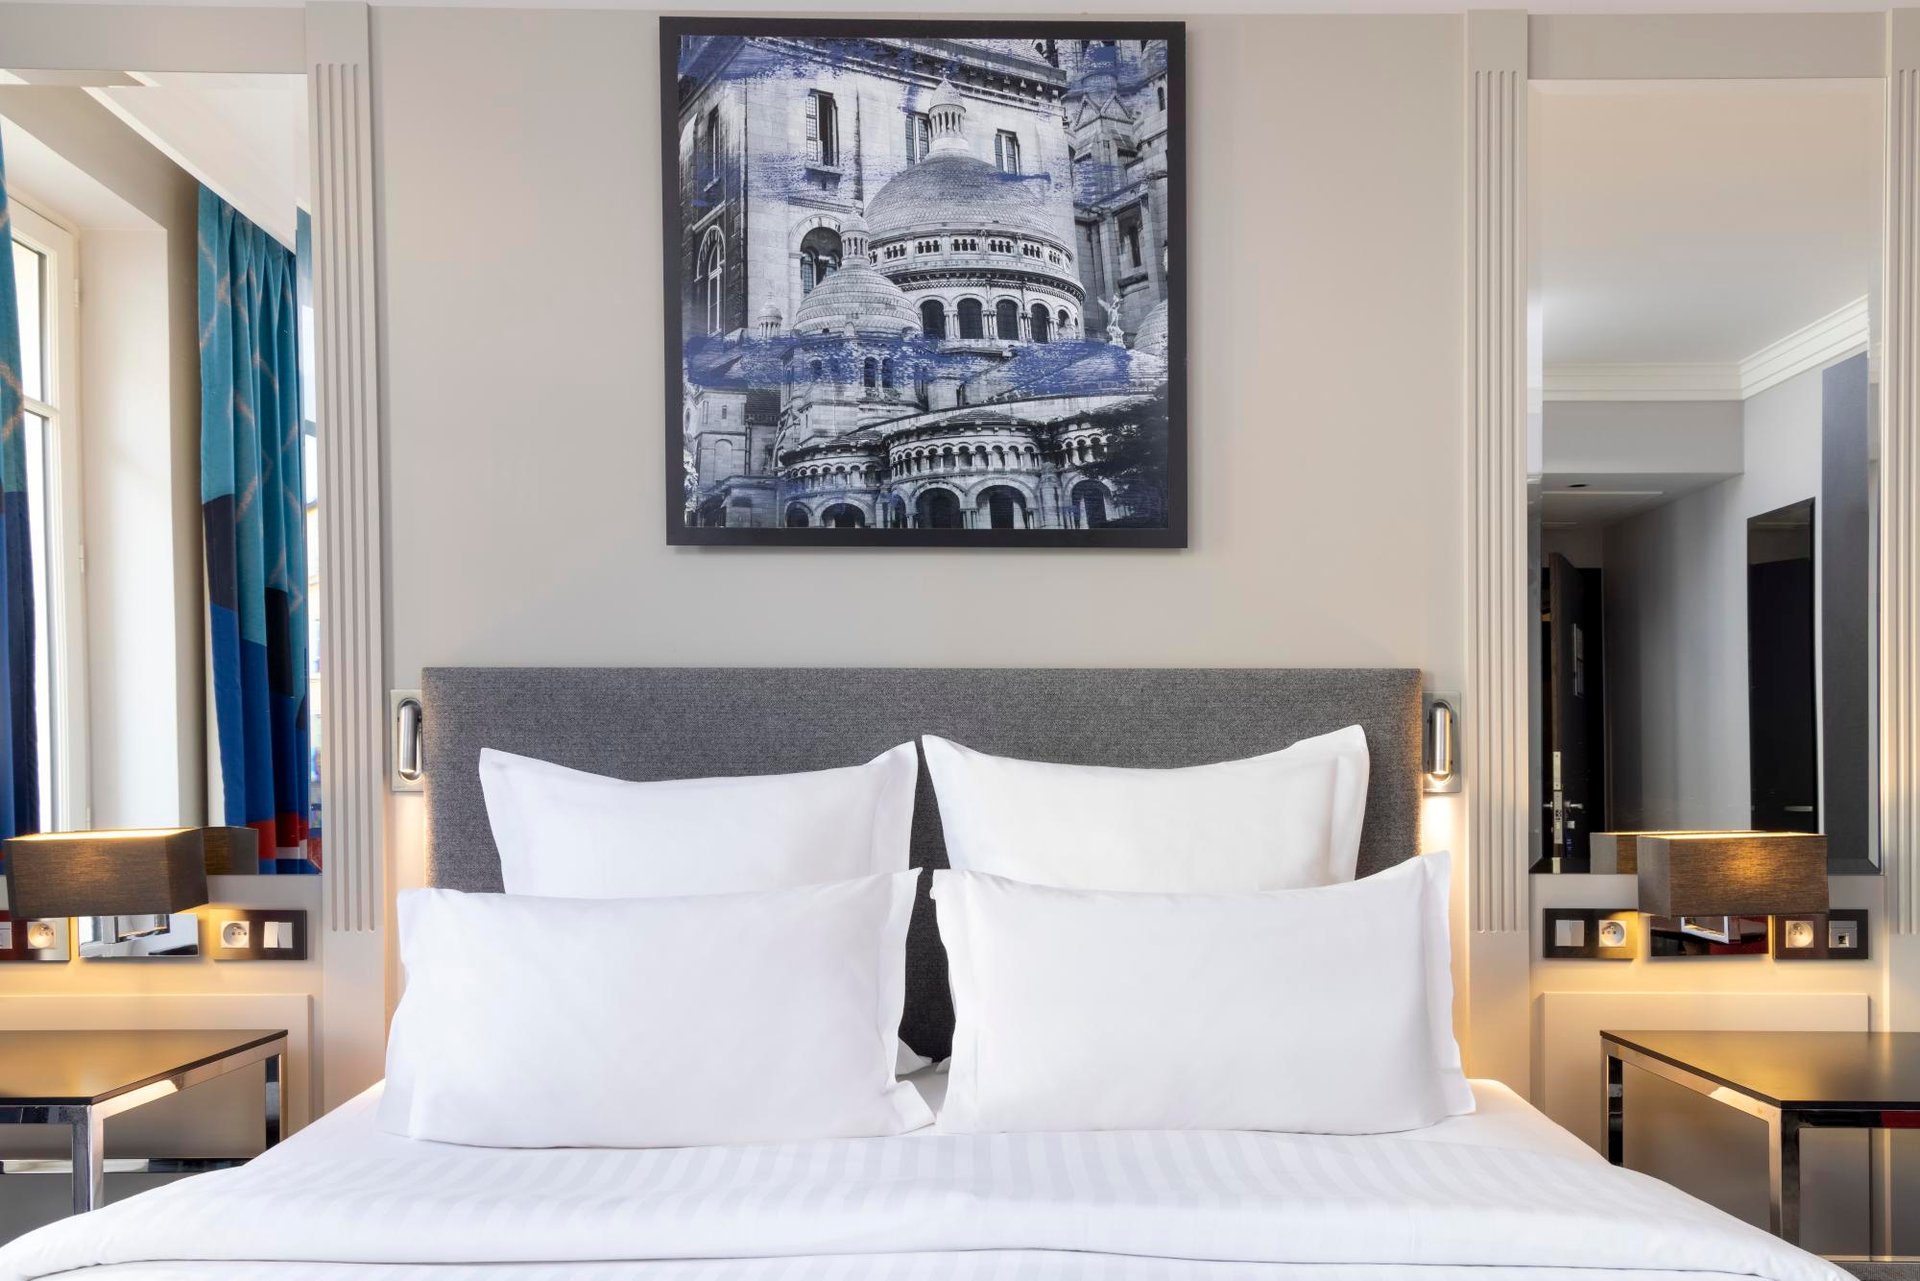 Hotel Les Matins de Paris Room Day Use